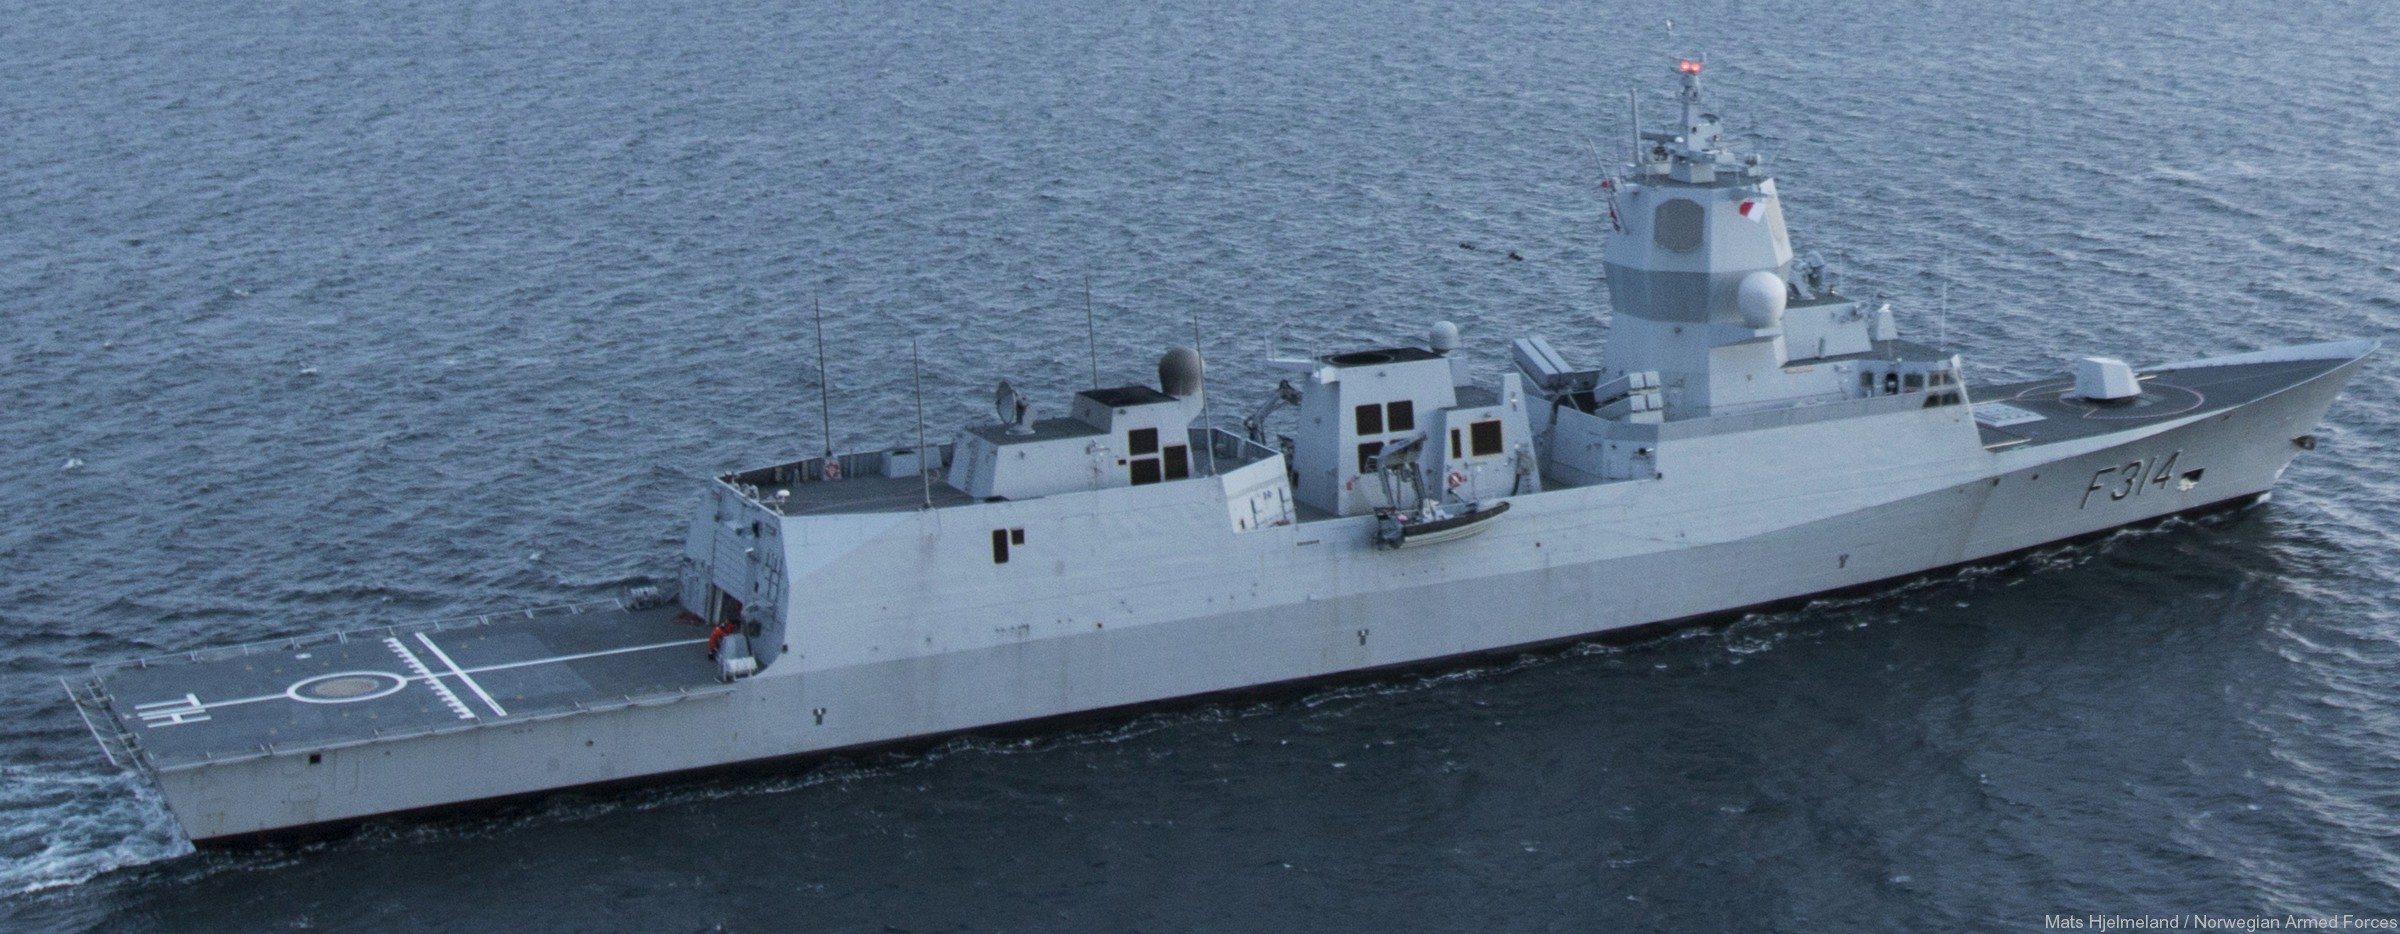 f-314 thor heyerdahl hnoms knm fridtjof nansen class frigate royal norwegian navy 32